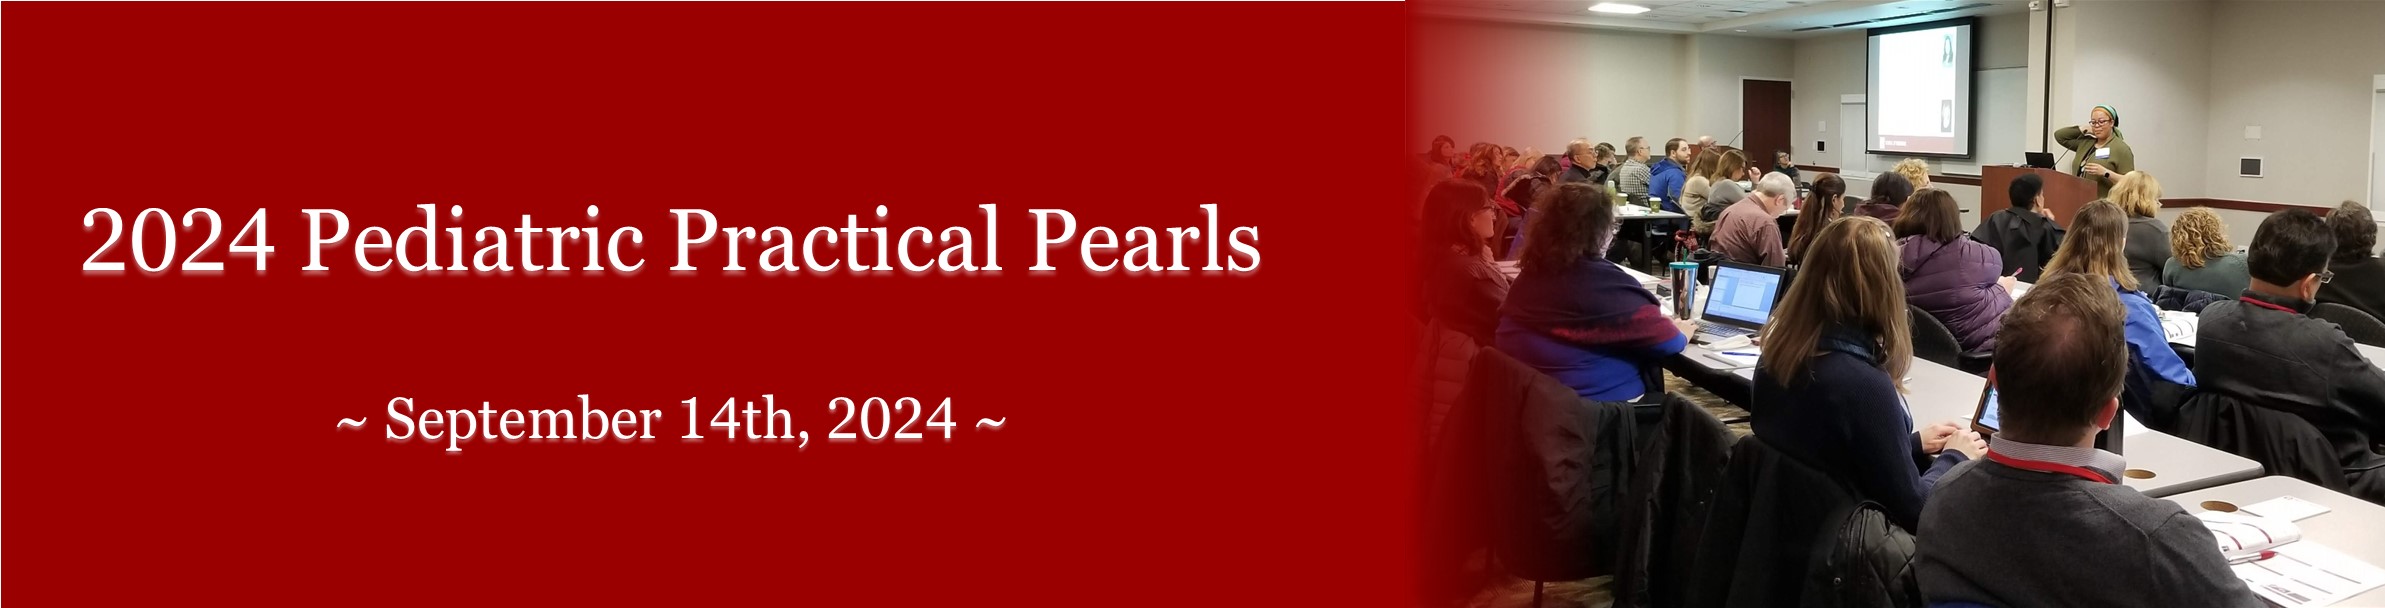 September 2024 Pediatric Practical Pearls Banner